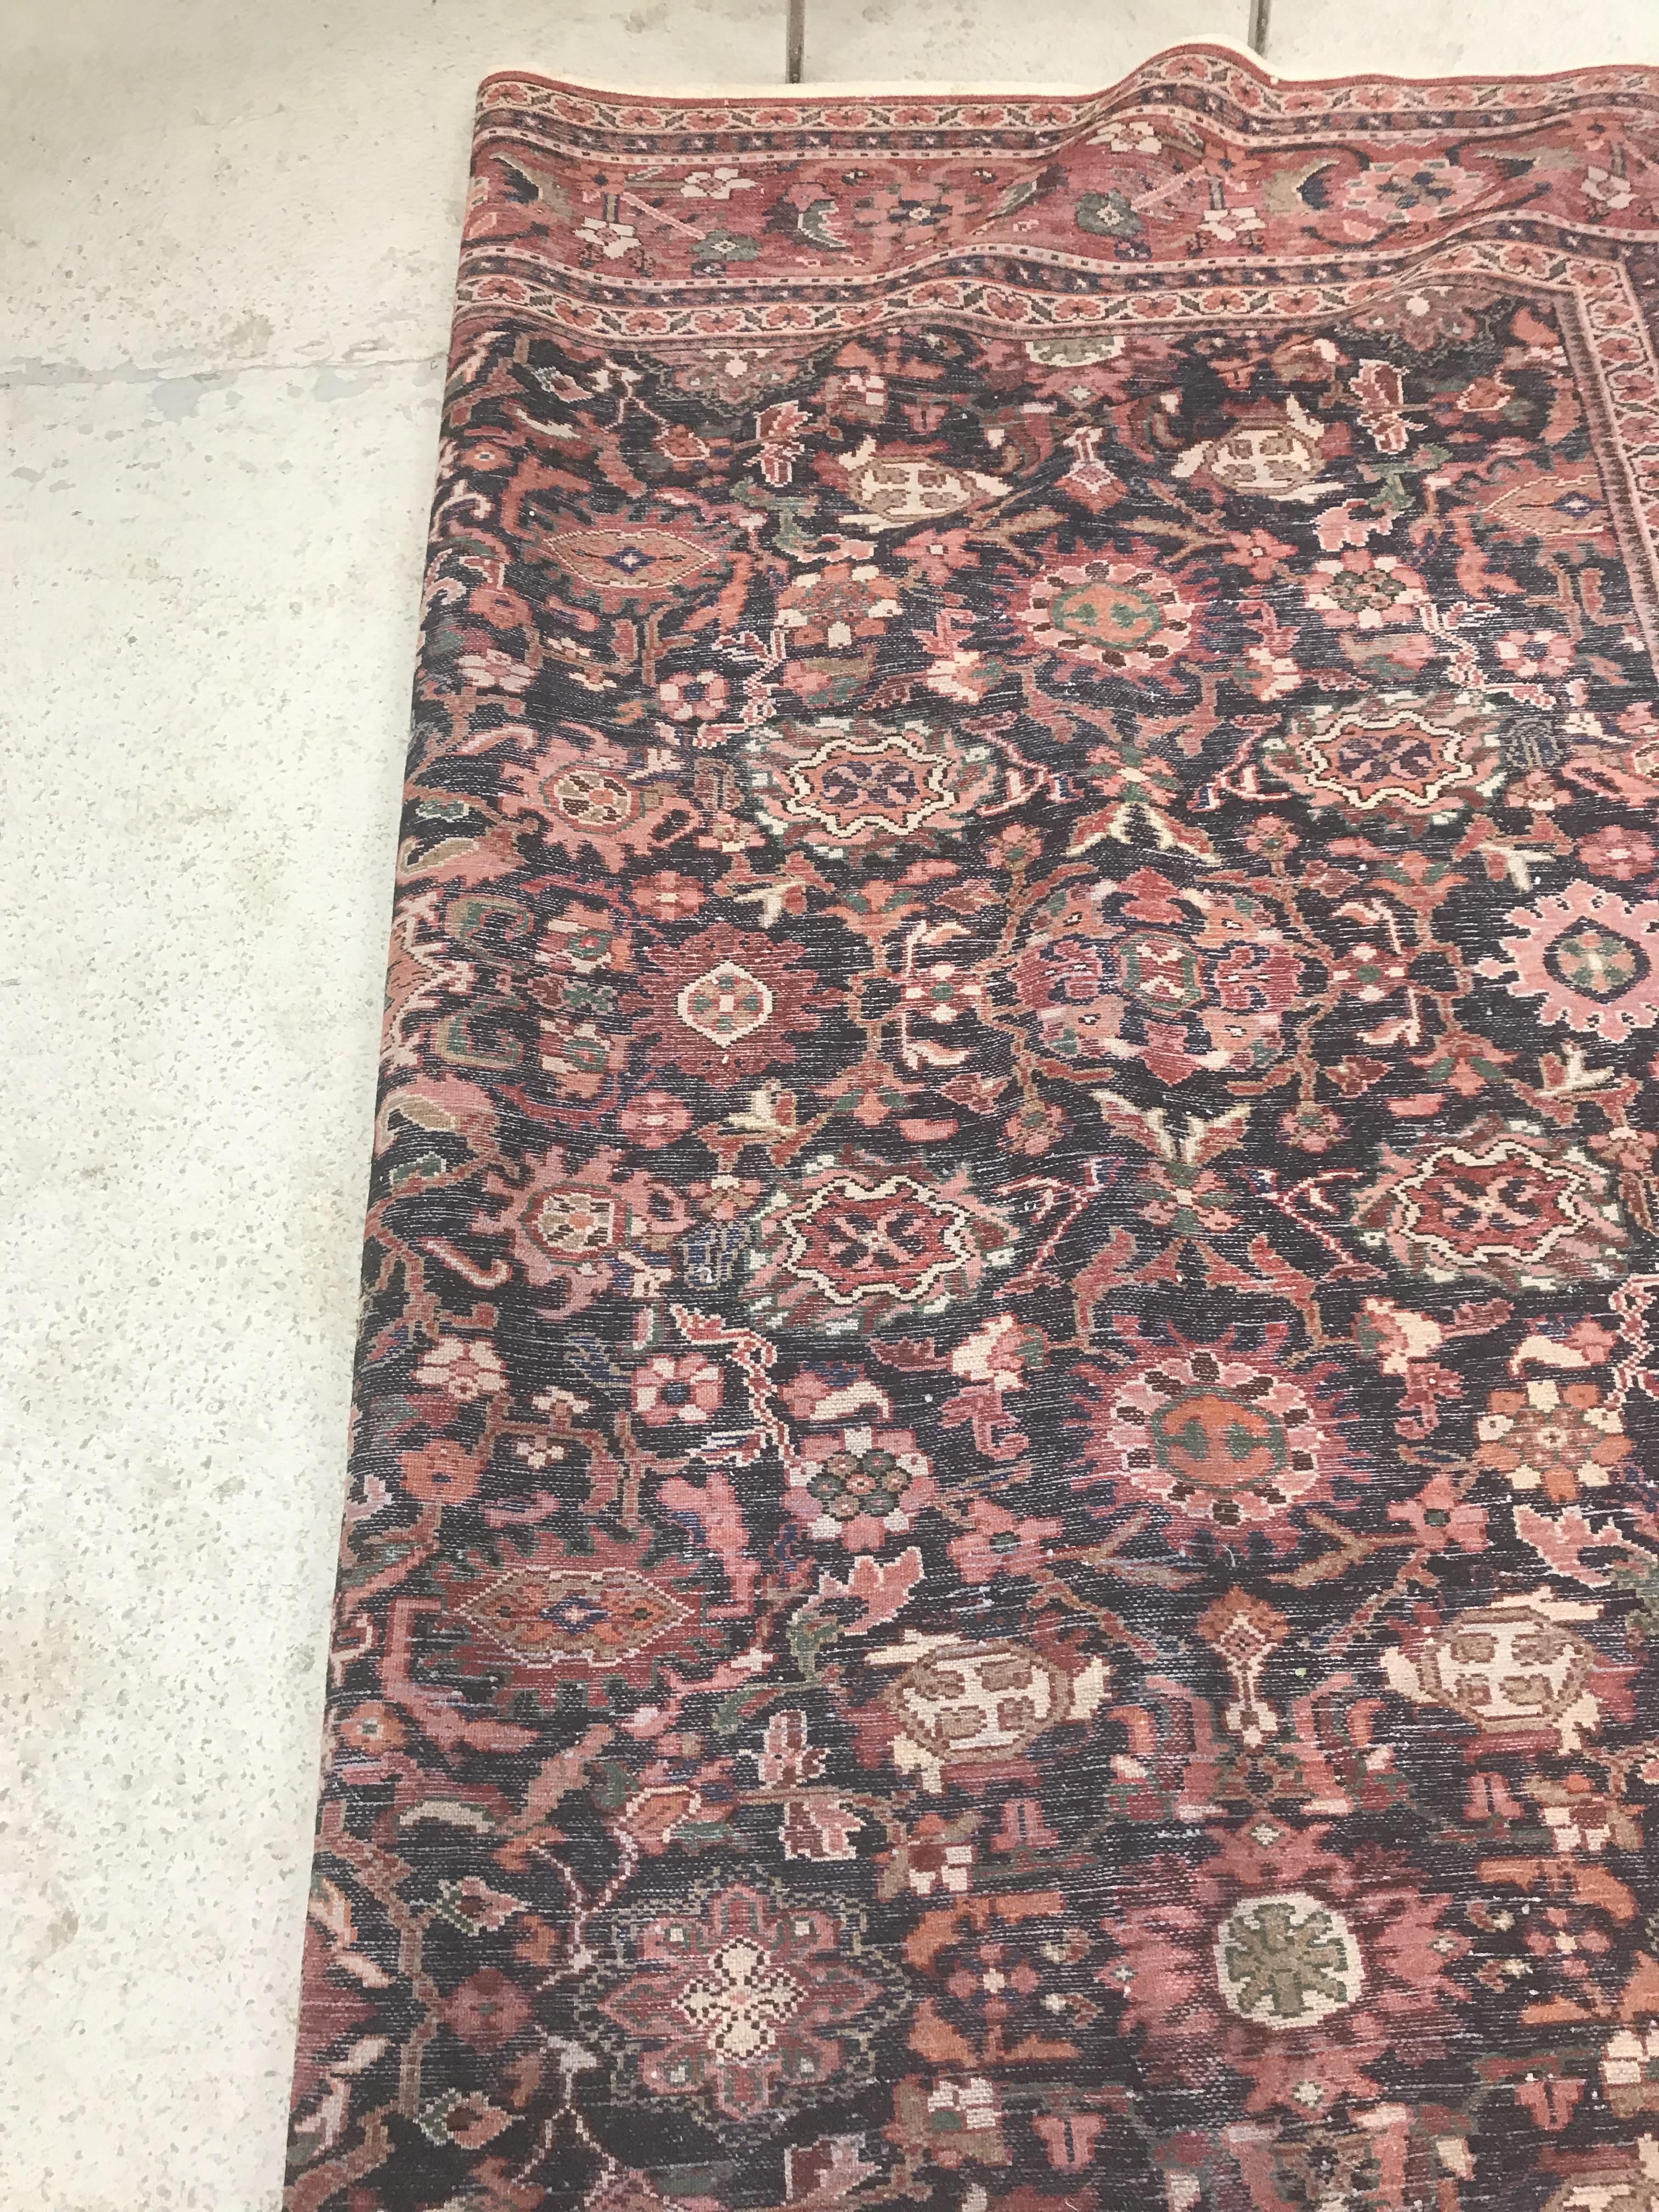 A 20th Century Afghan Kazak carpet, - Image 28 of 36